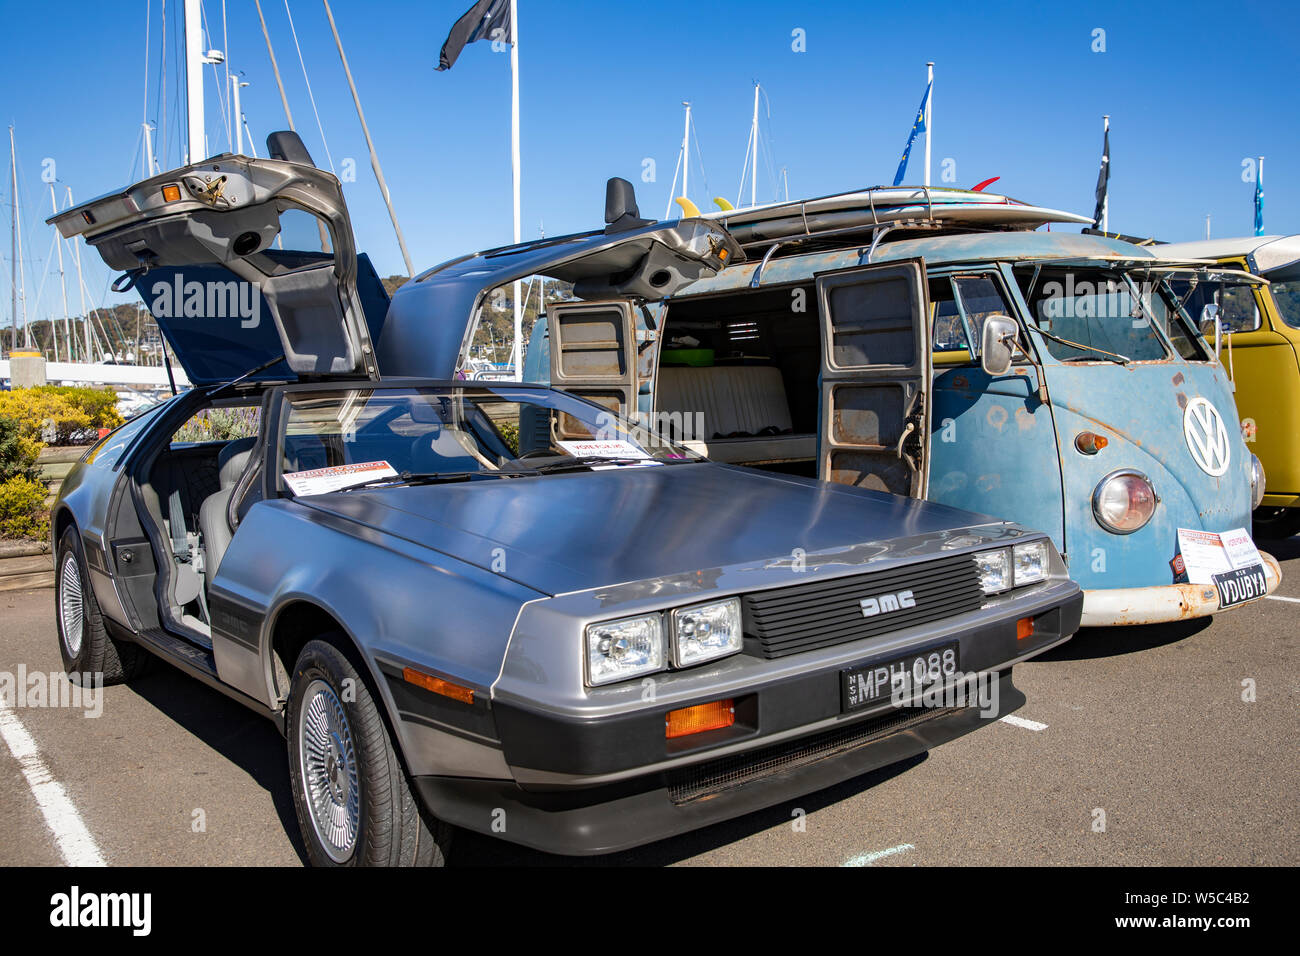 DMC Delorean classic sports car on display at a Sydney classic car show,New South Wales,Australia Stock Photo